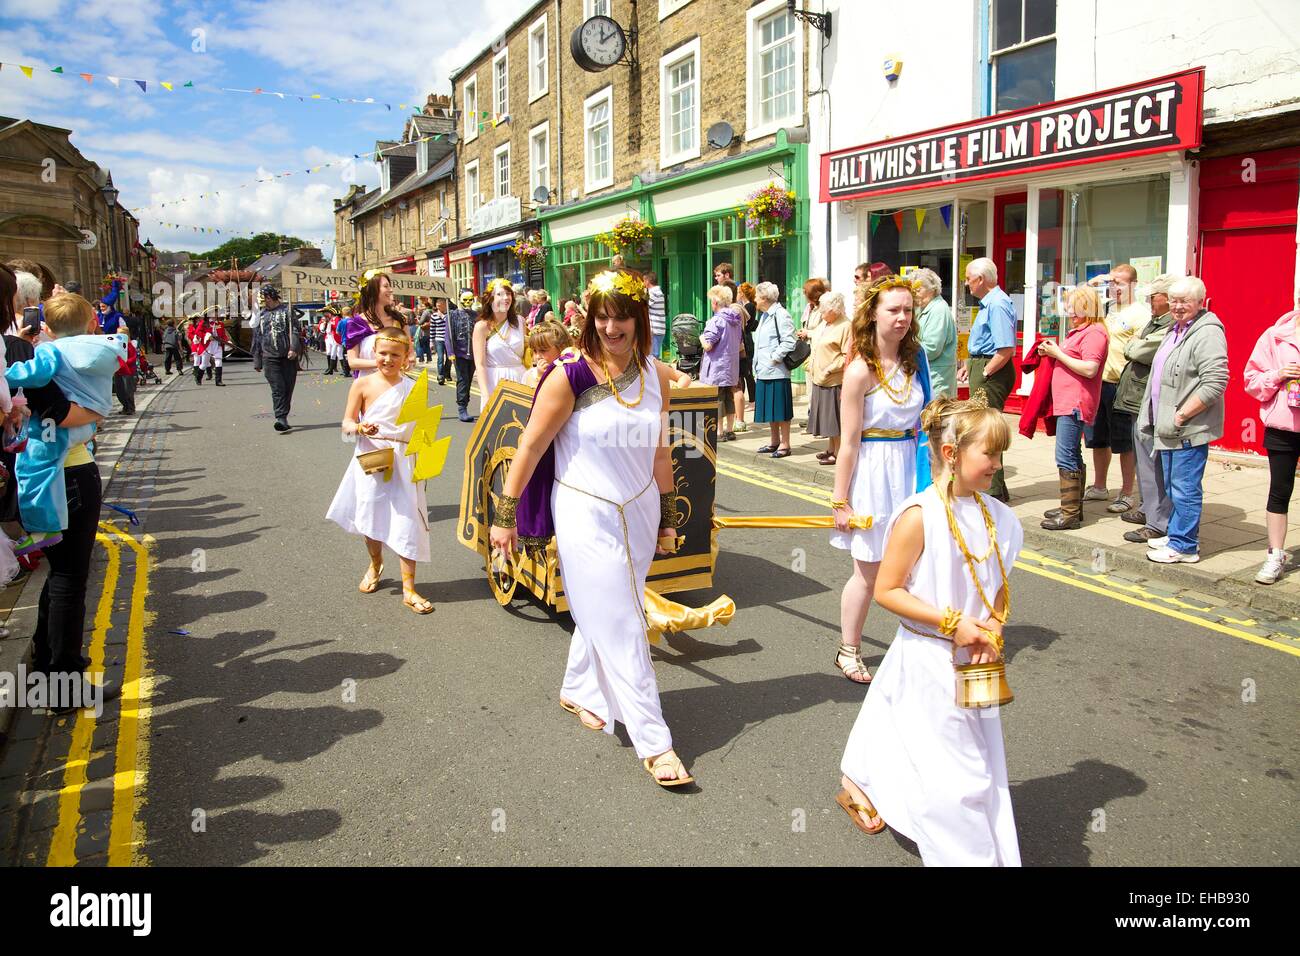 Girls and women parading, Haltwhistle Carnival, Haltwhistle, Northumberland, UK. Stock Photo